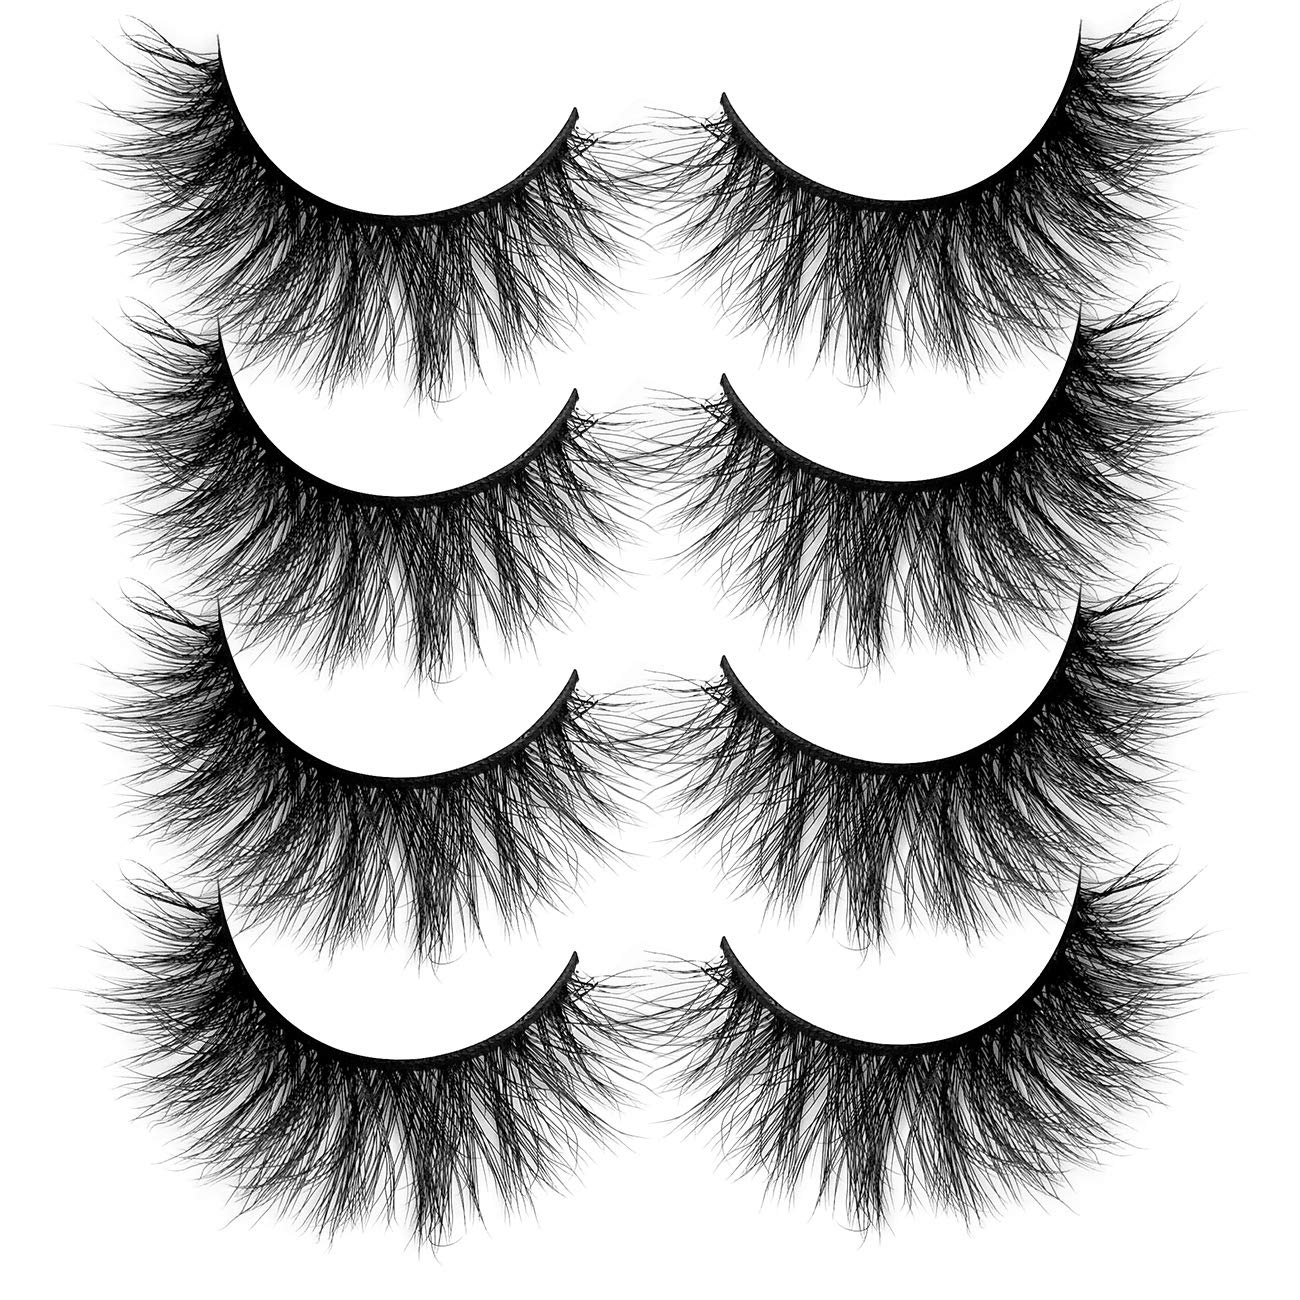 3D Faux Mink Eyelashes Pack, Fake Eyelash Fluffy Volume Natural Cross Lashes Soft Handmade Wispy Eye Makeup